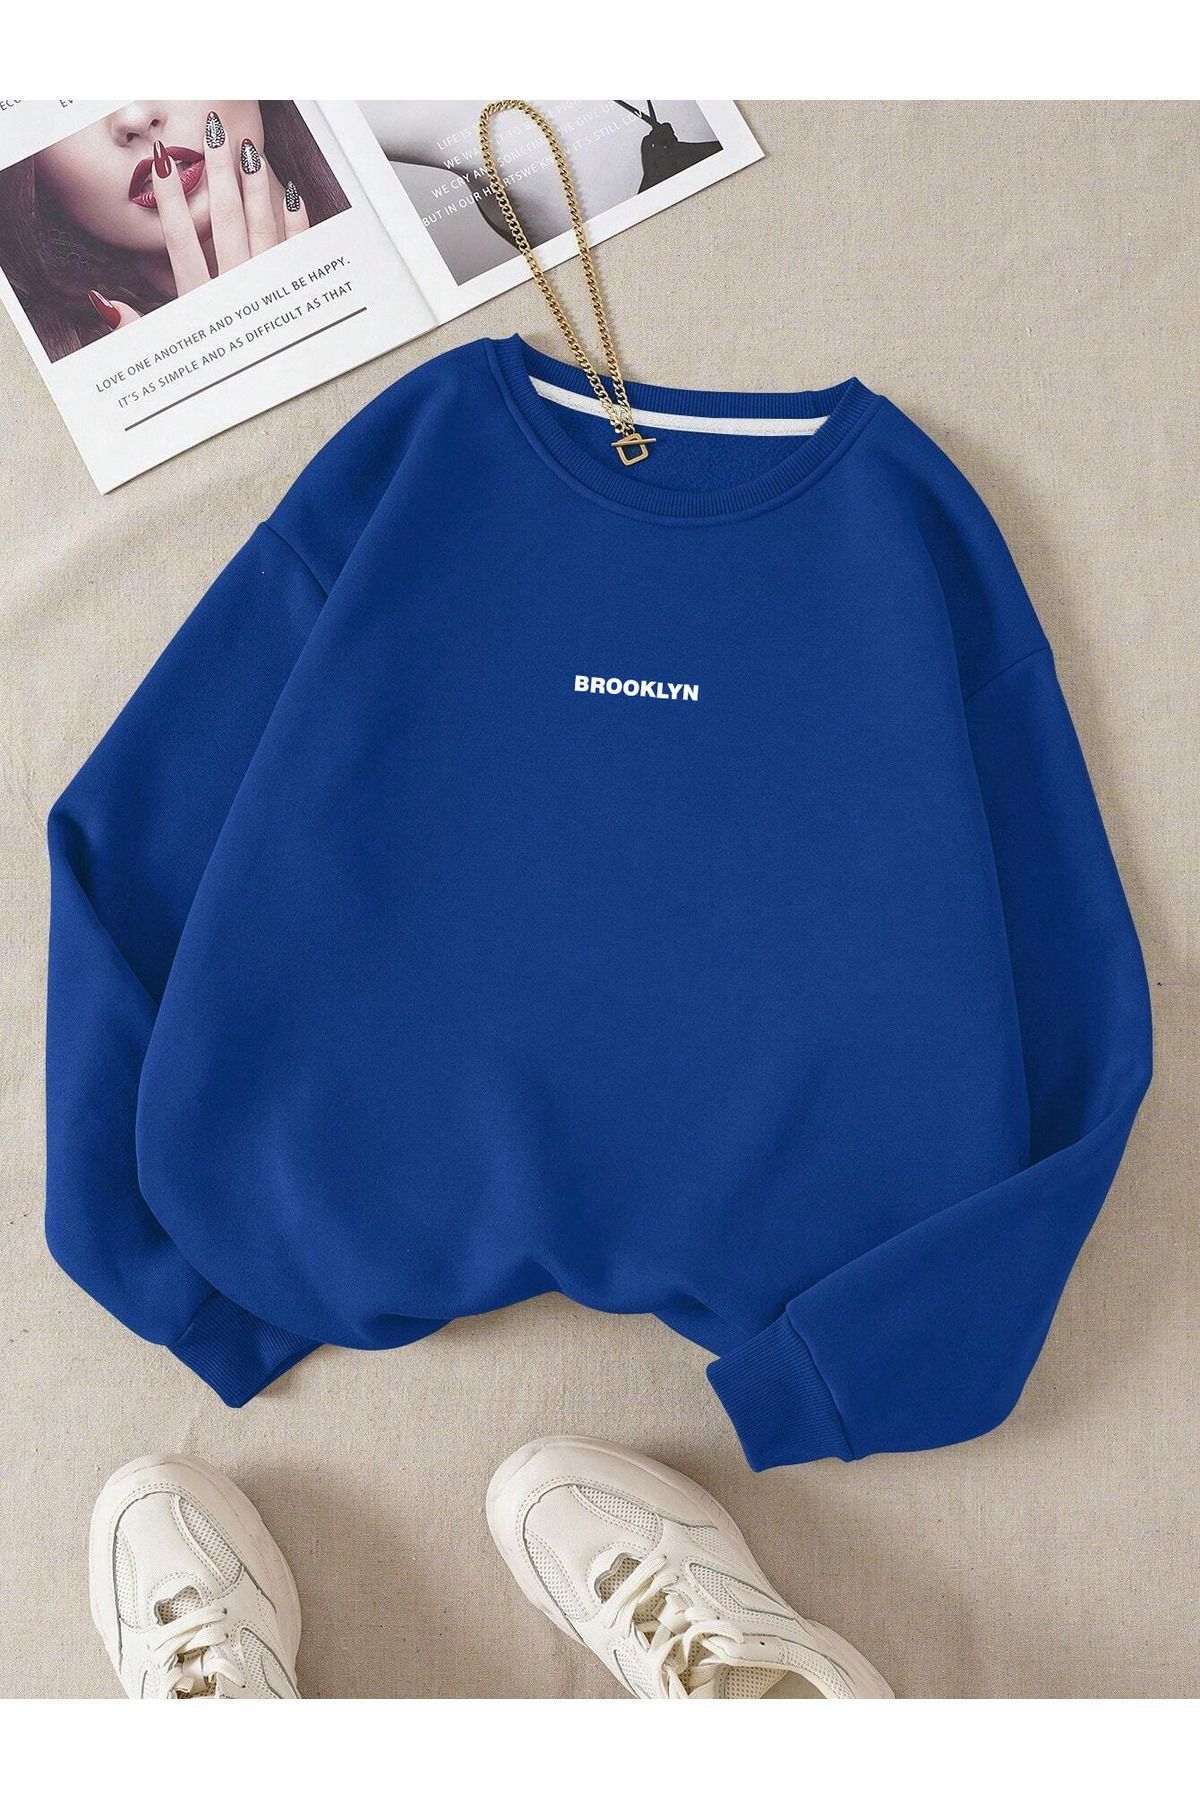 MOONBULL Unisex Ön Göğüs Brooklyn Baskılı Oversize Sweatshirt